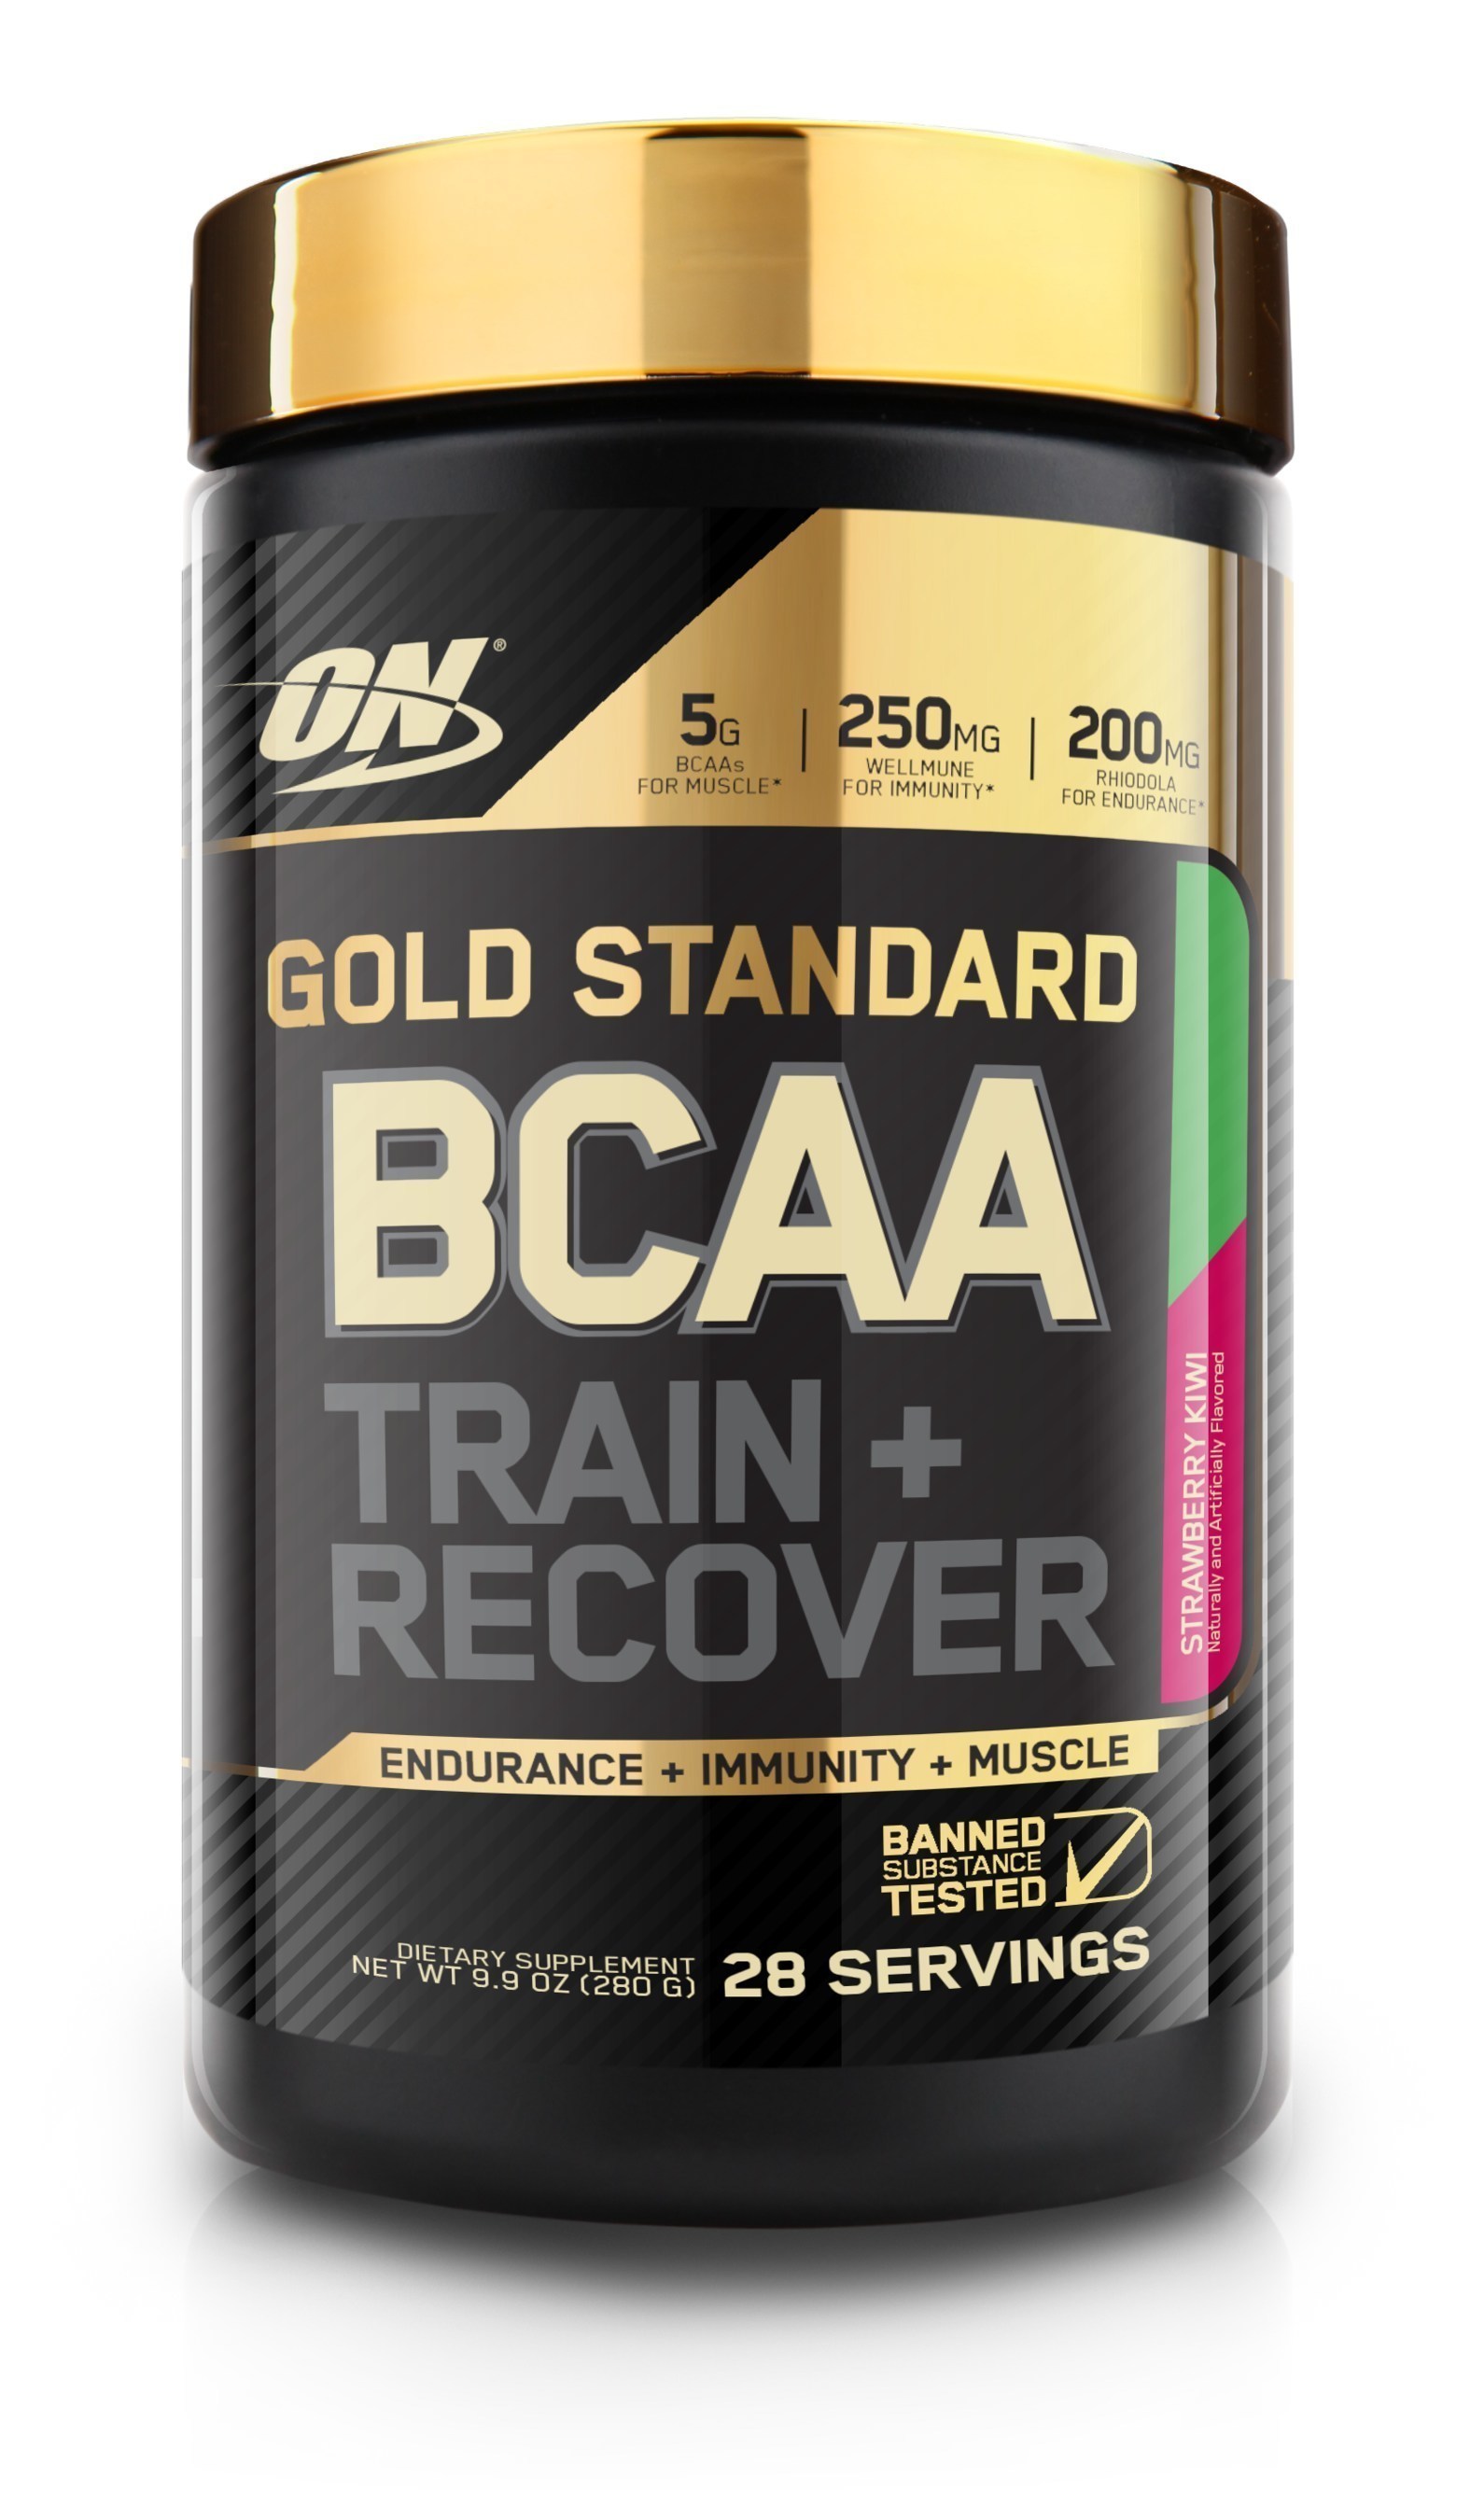 Optimum Nutrition Introduces Gold Standard Bcaa Intra